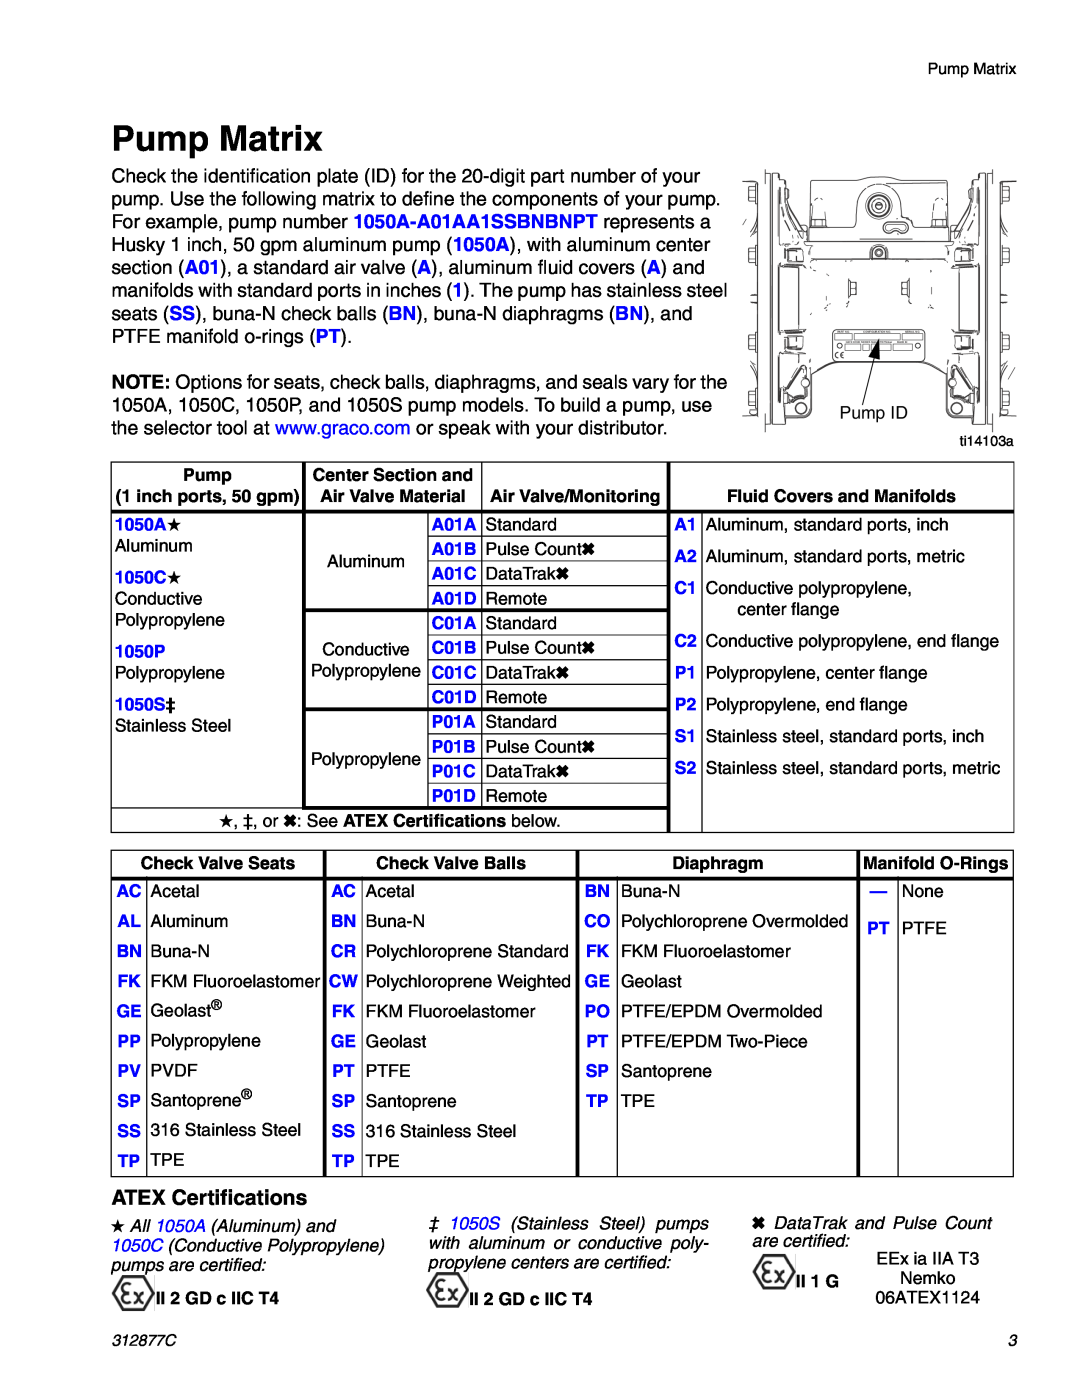 Graco 312877C important safety instructions Pump Matrix, ATEX Certifications 